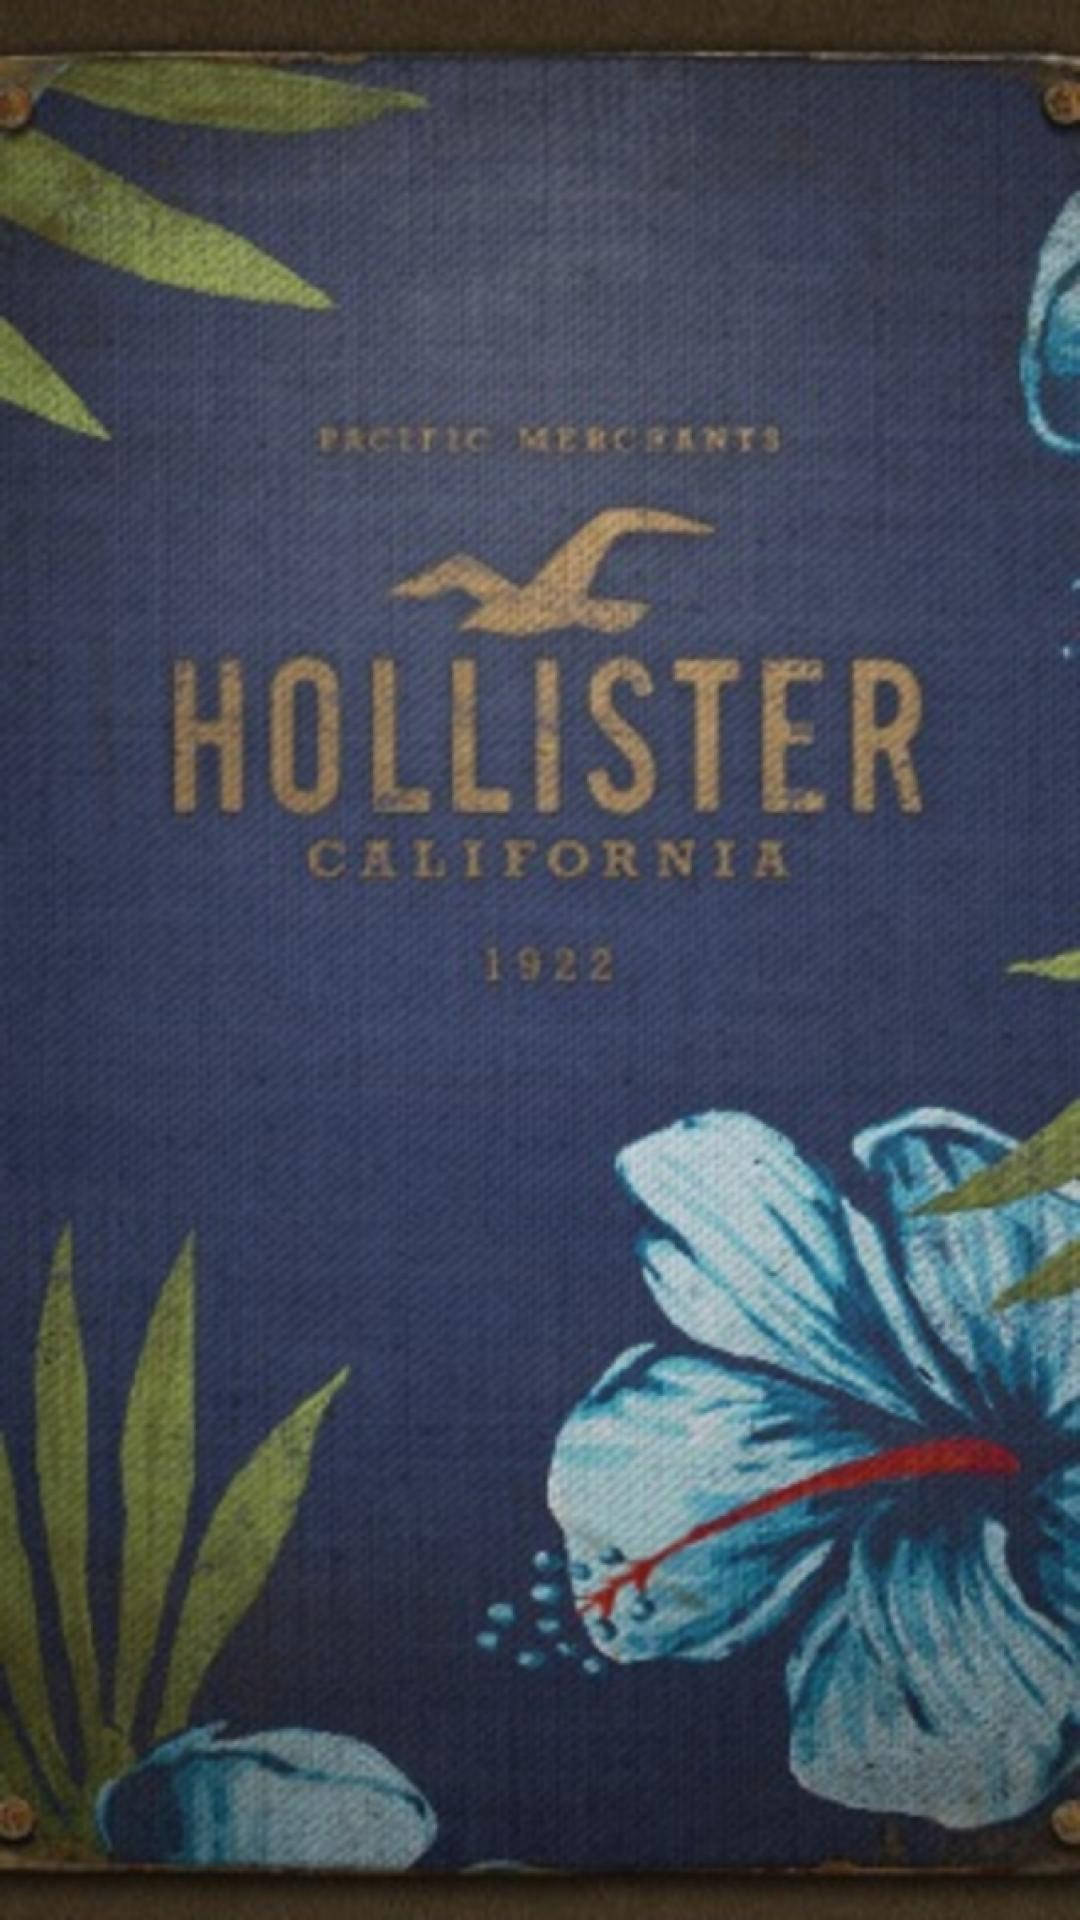 Pacific Merchants Hollister California 1922 Background